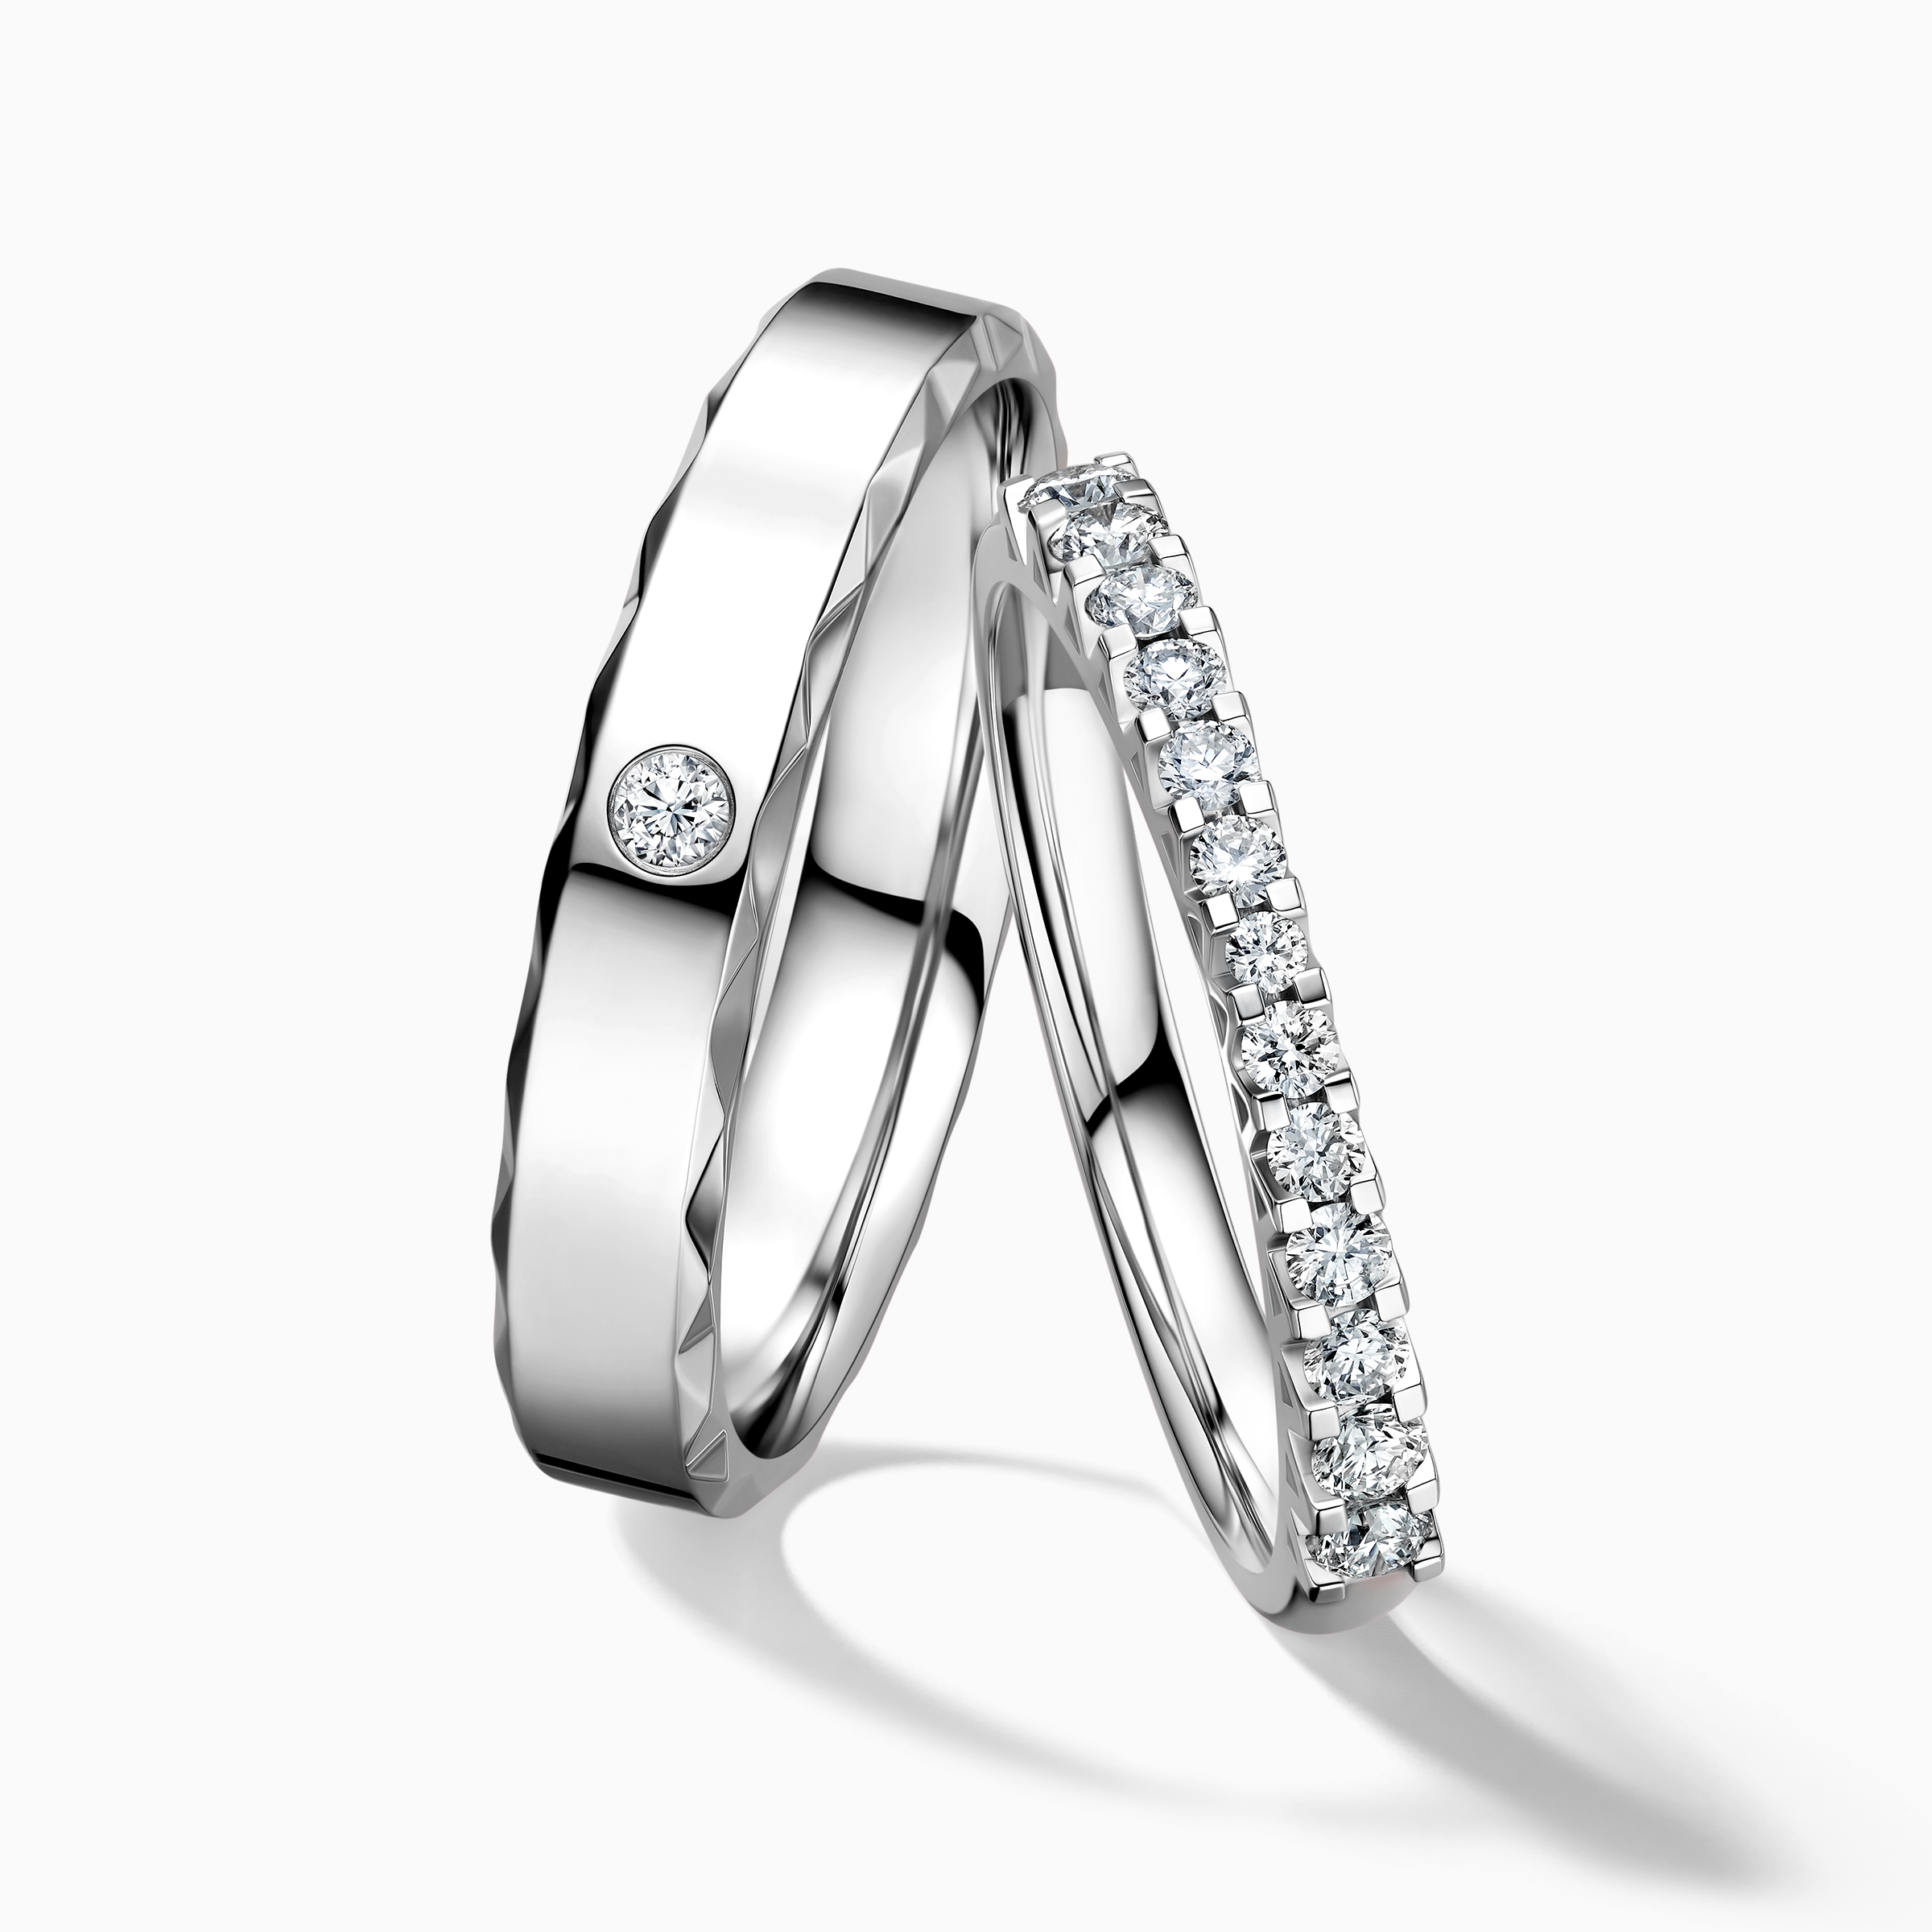 Darry Ring pavé diamond wedding band sets in platinum